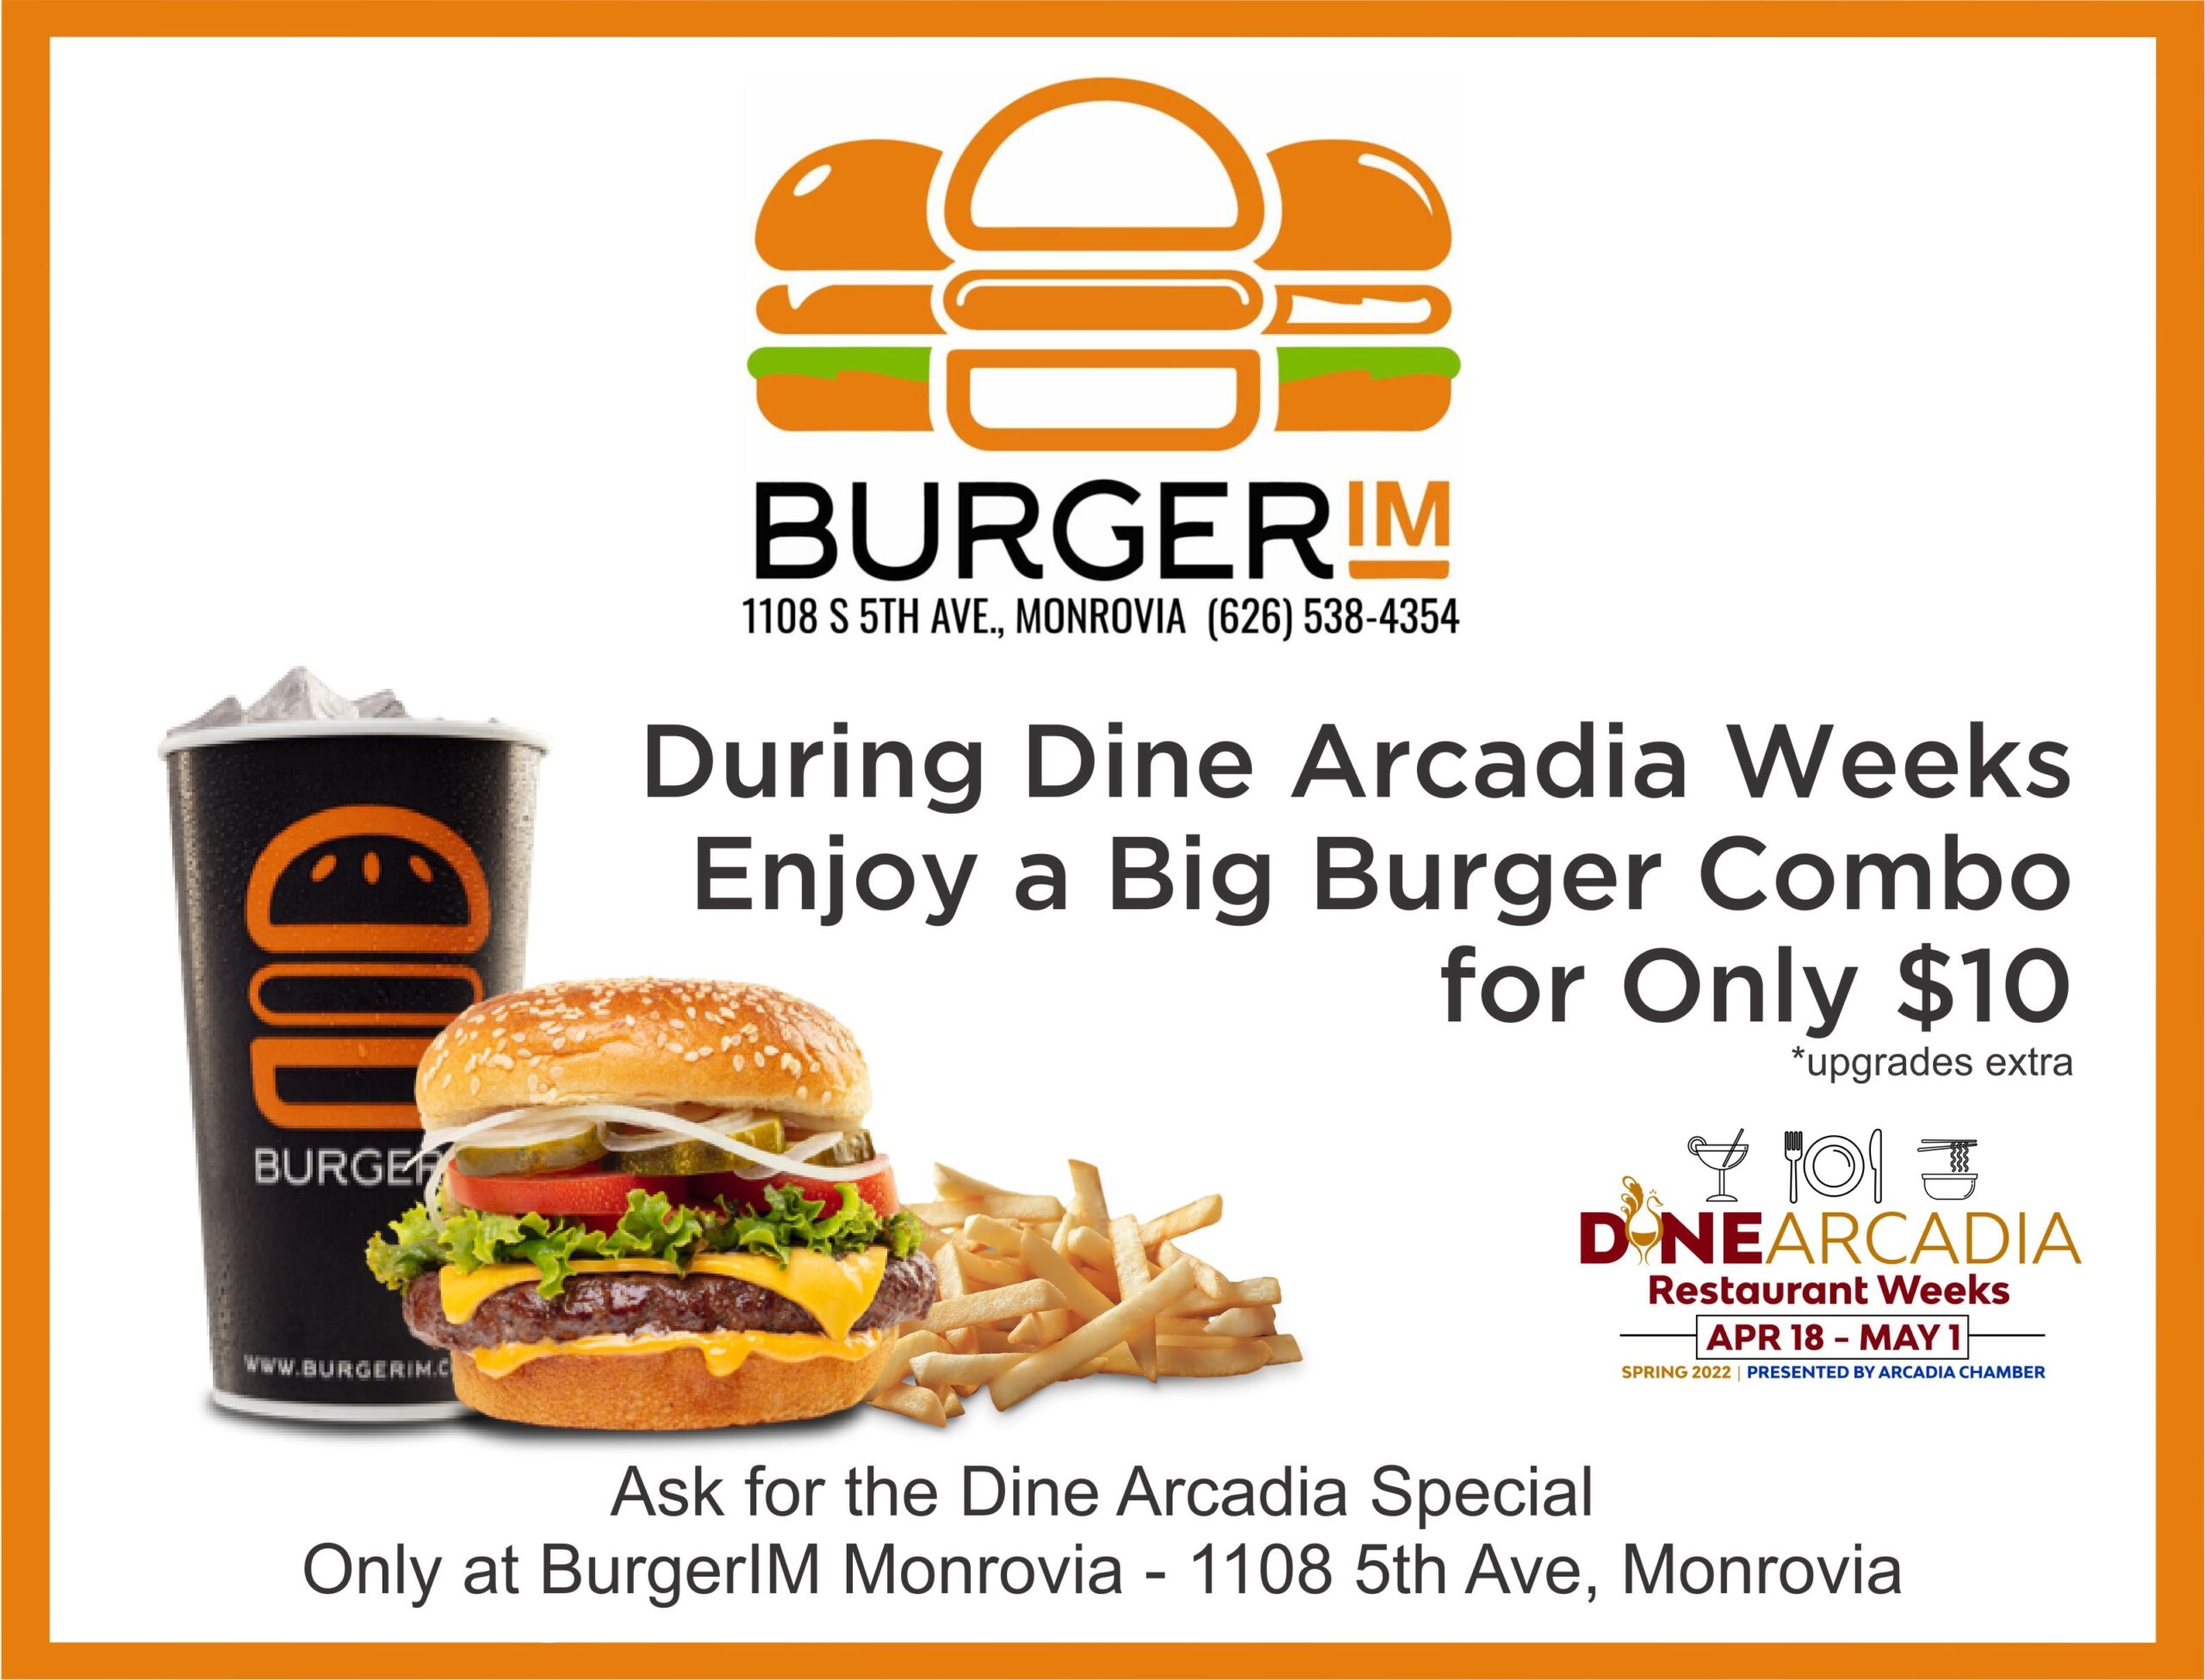 BurgerIM Dine Arcadia promo showing big burger combo and BurgerIM logo